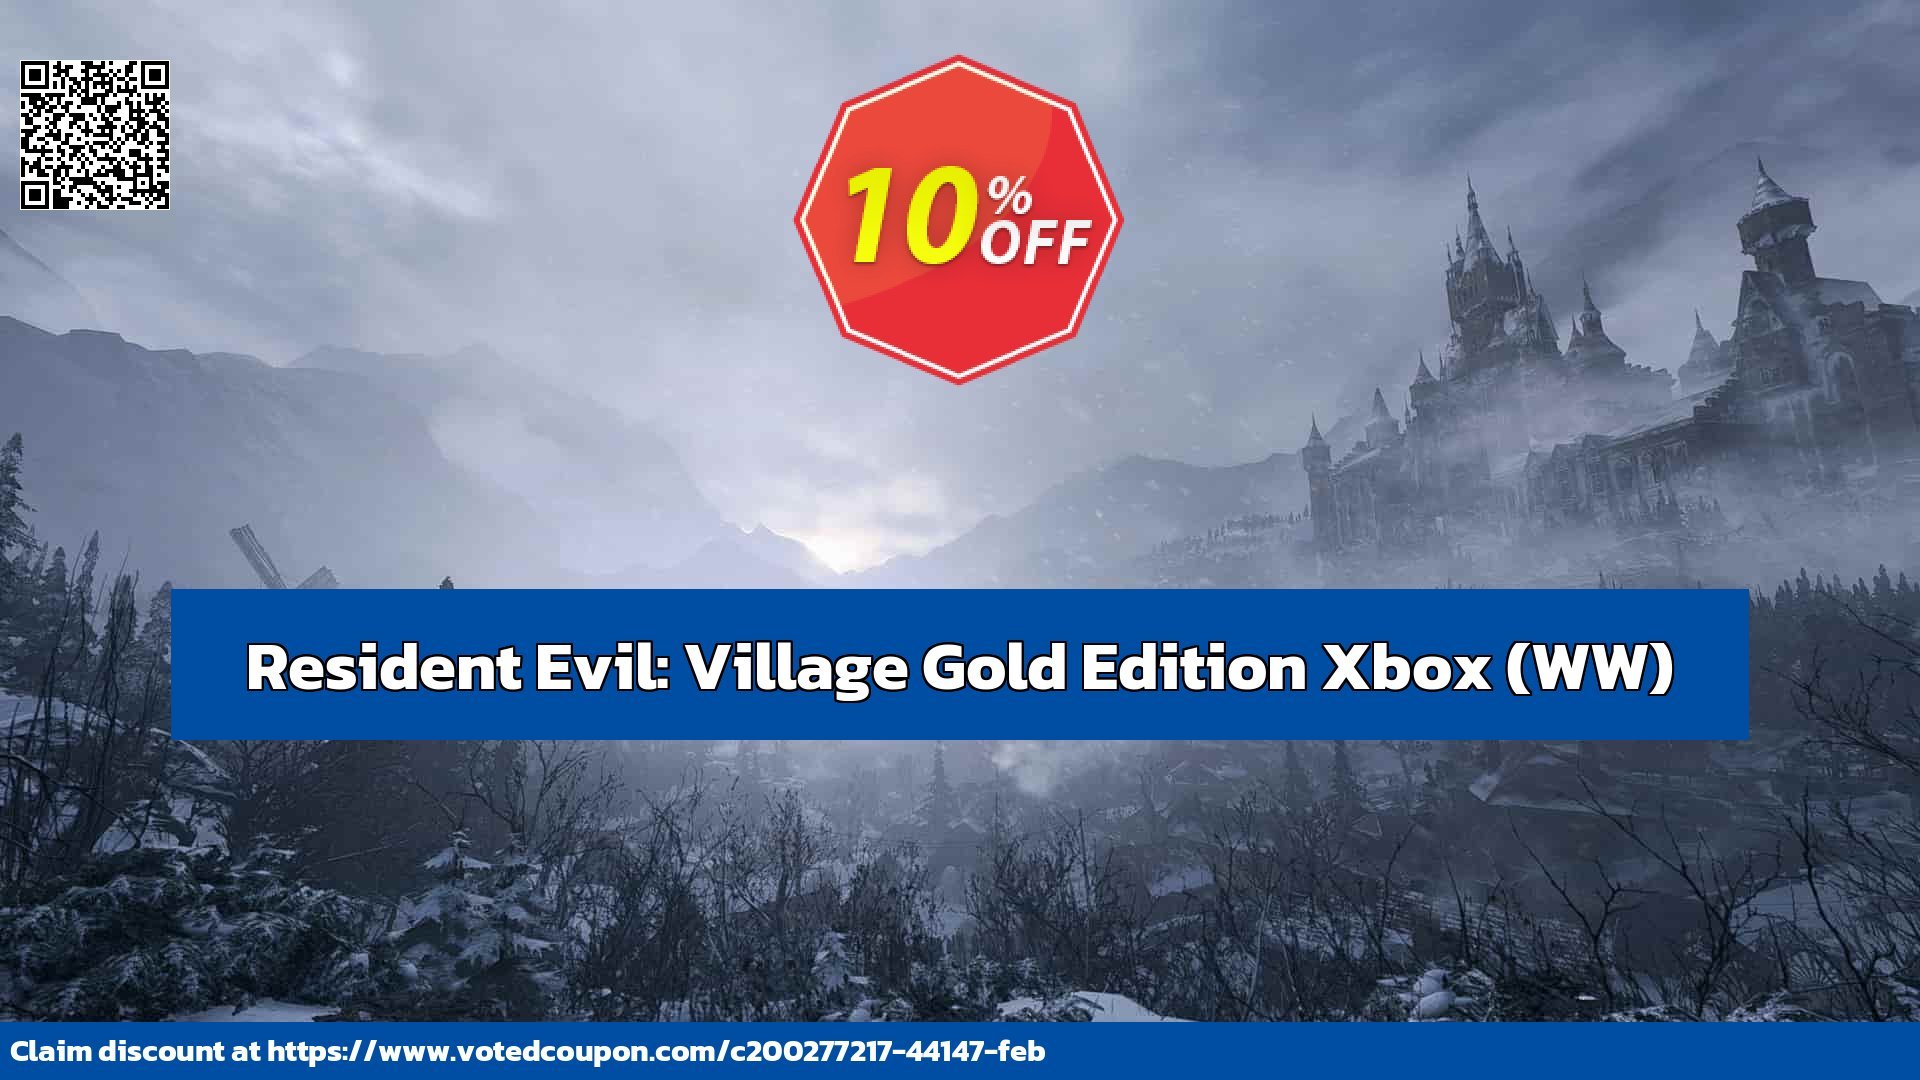 Resident Evil: Village Gold Edition Xbox, WW  Coupon, discount Resident Evil: Village Gold Edition Xbox (WW) Deal CDkeys. Promotion: Resident Evil: Village Gold Edition Xbox (WW) Exclusive Sale offer